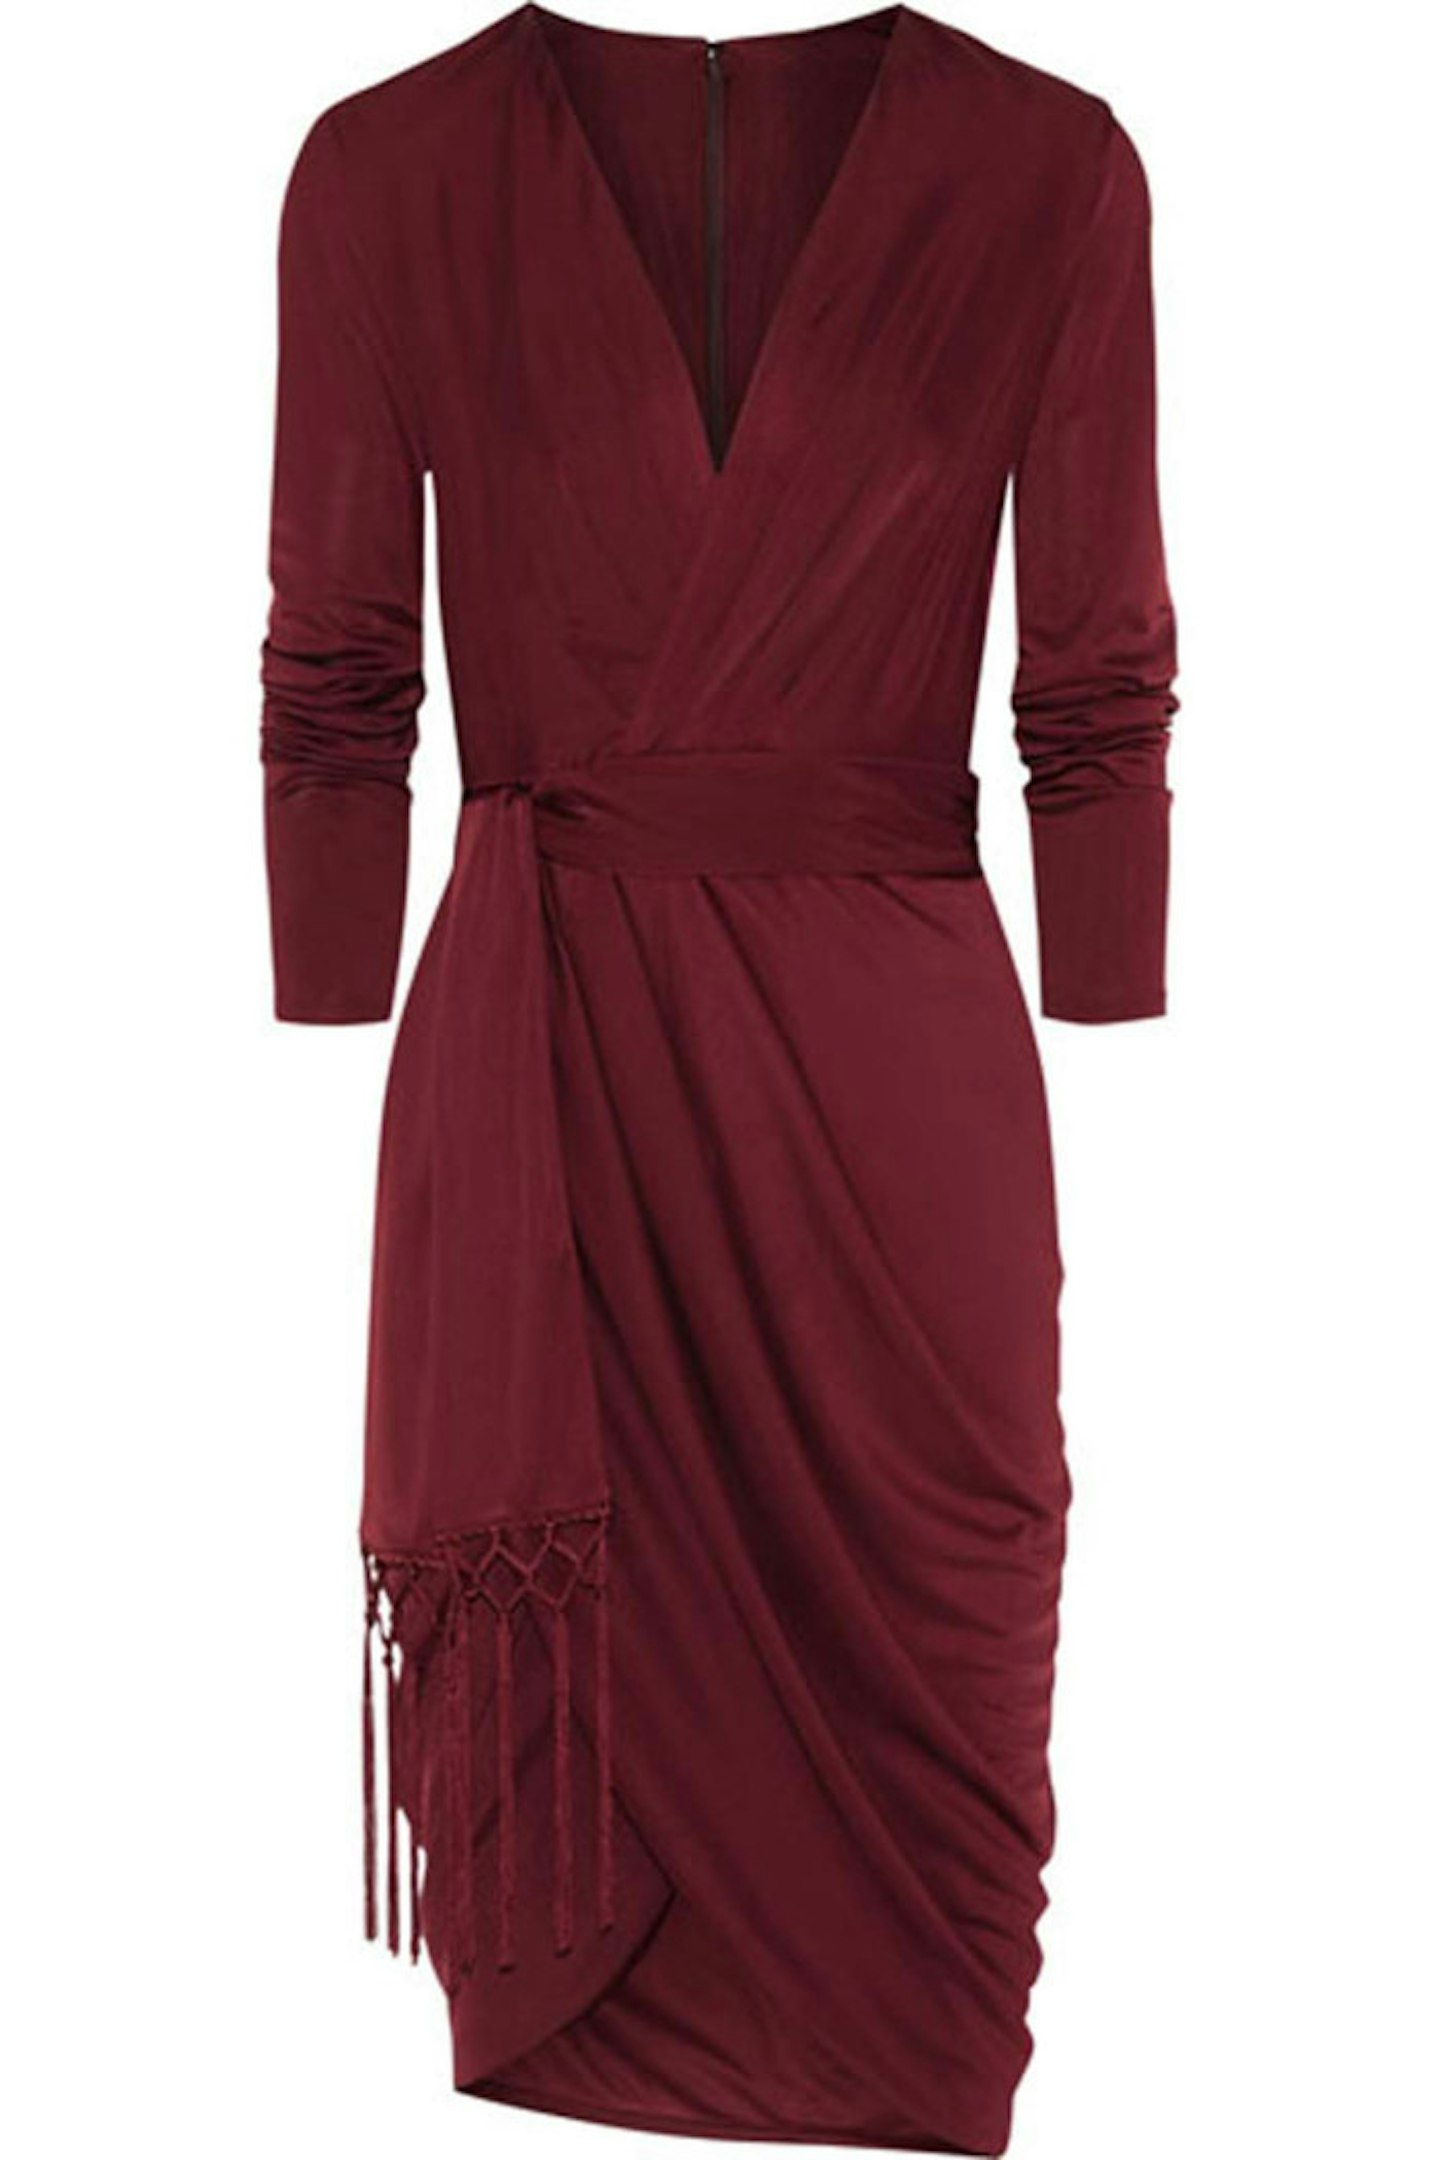 Red Satin Wrap Dress, £40, Altuzarra for Target at Net-a-Porter